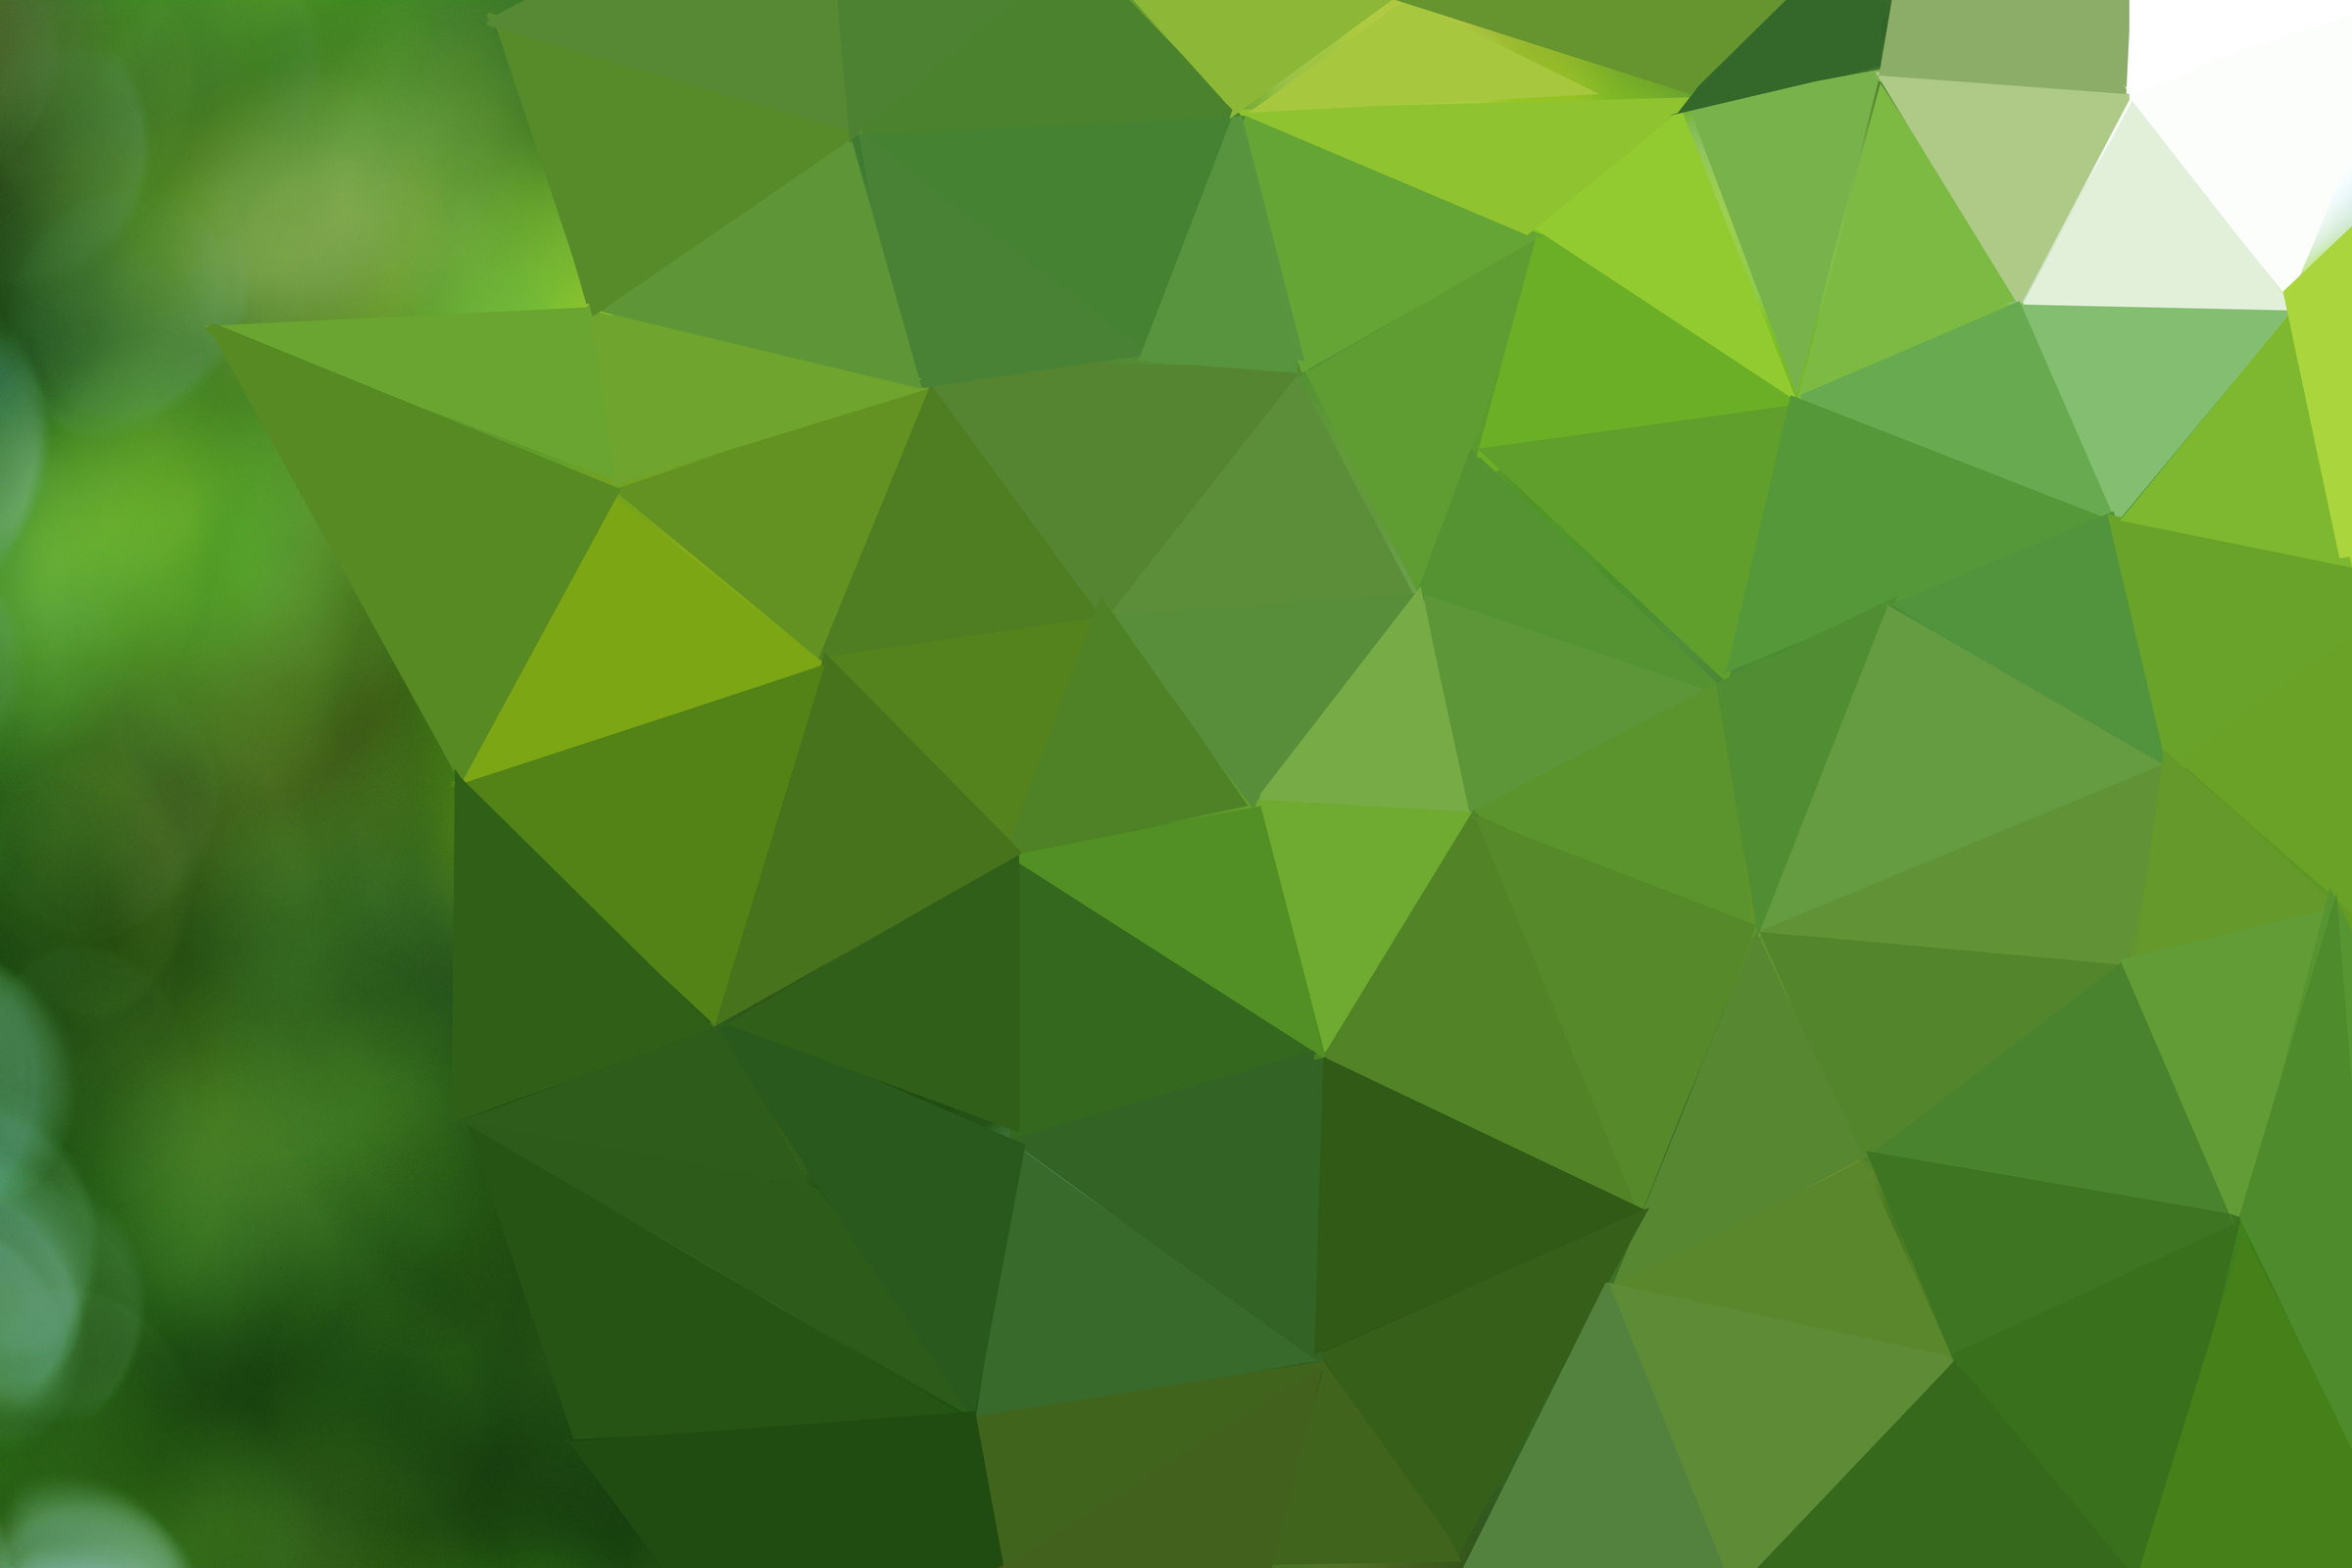  Green Polygonal Background